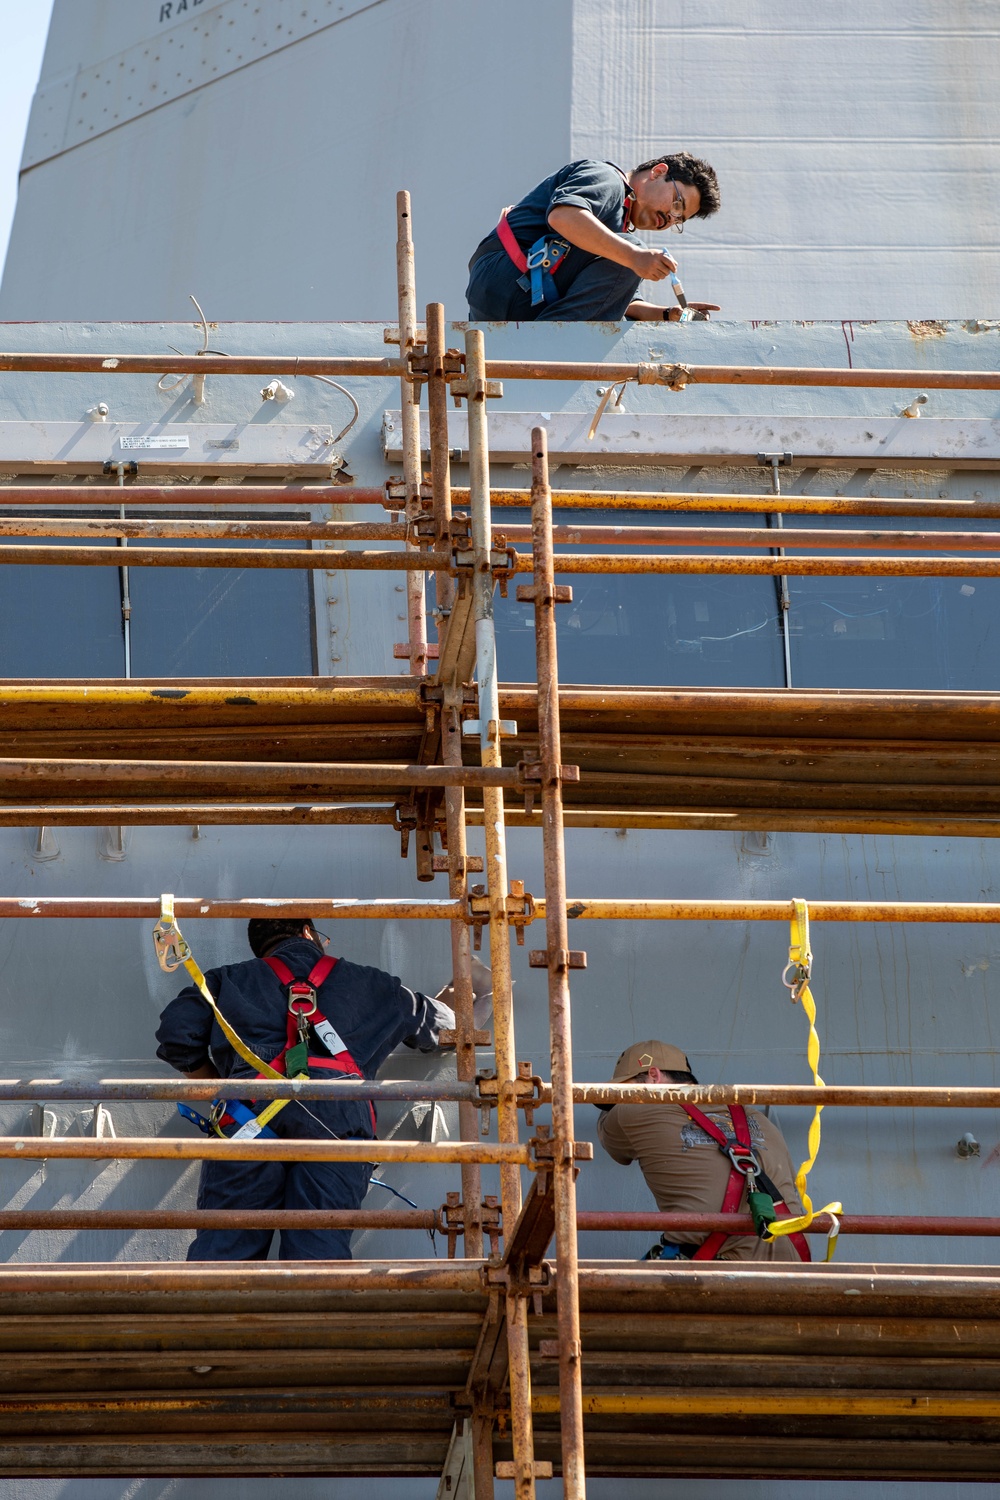 Preserving the ship: USS Arlington conducts mid-deployment voyage repairs in Rijeka, Croatia